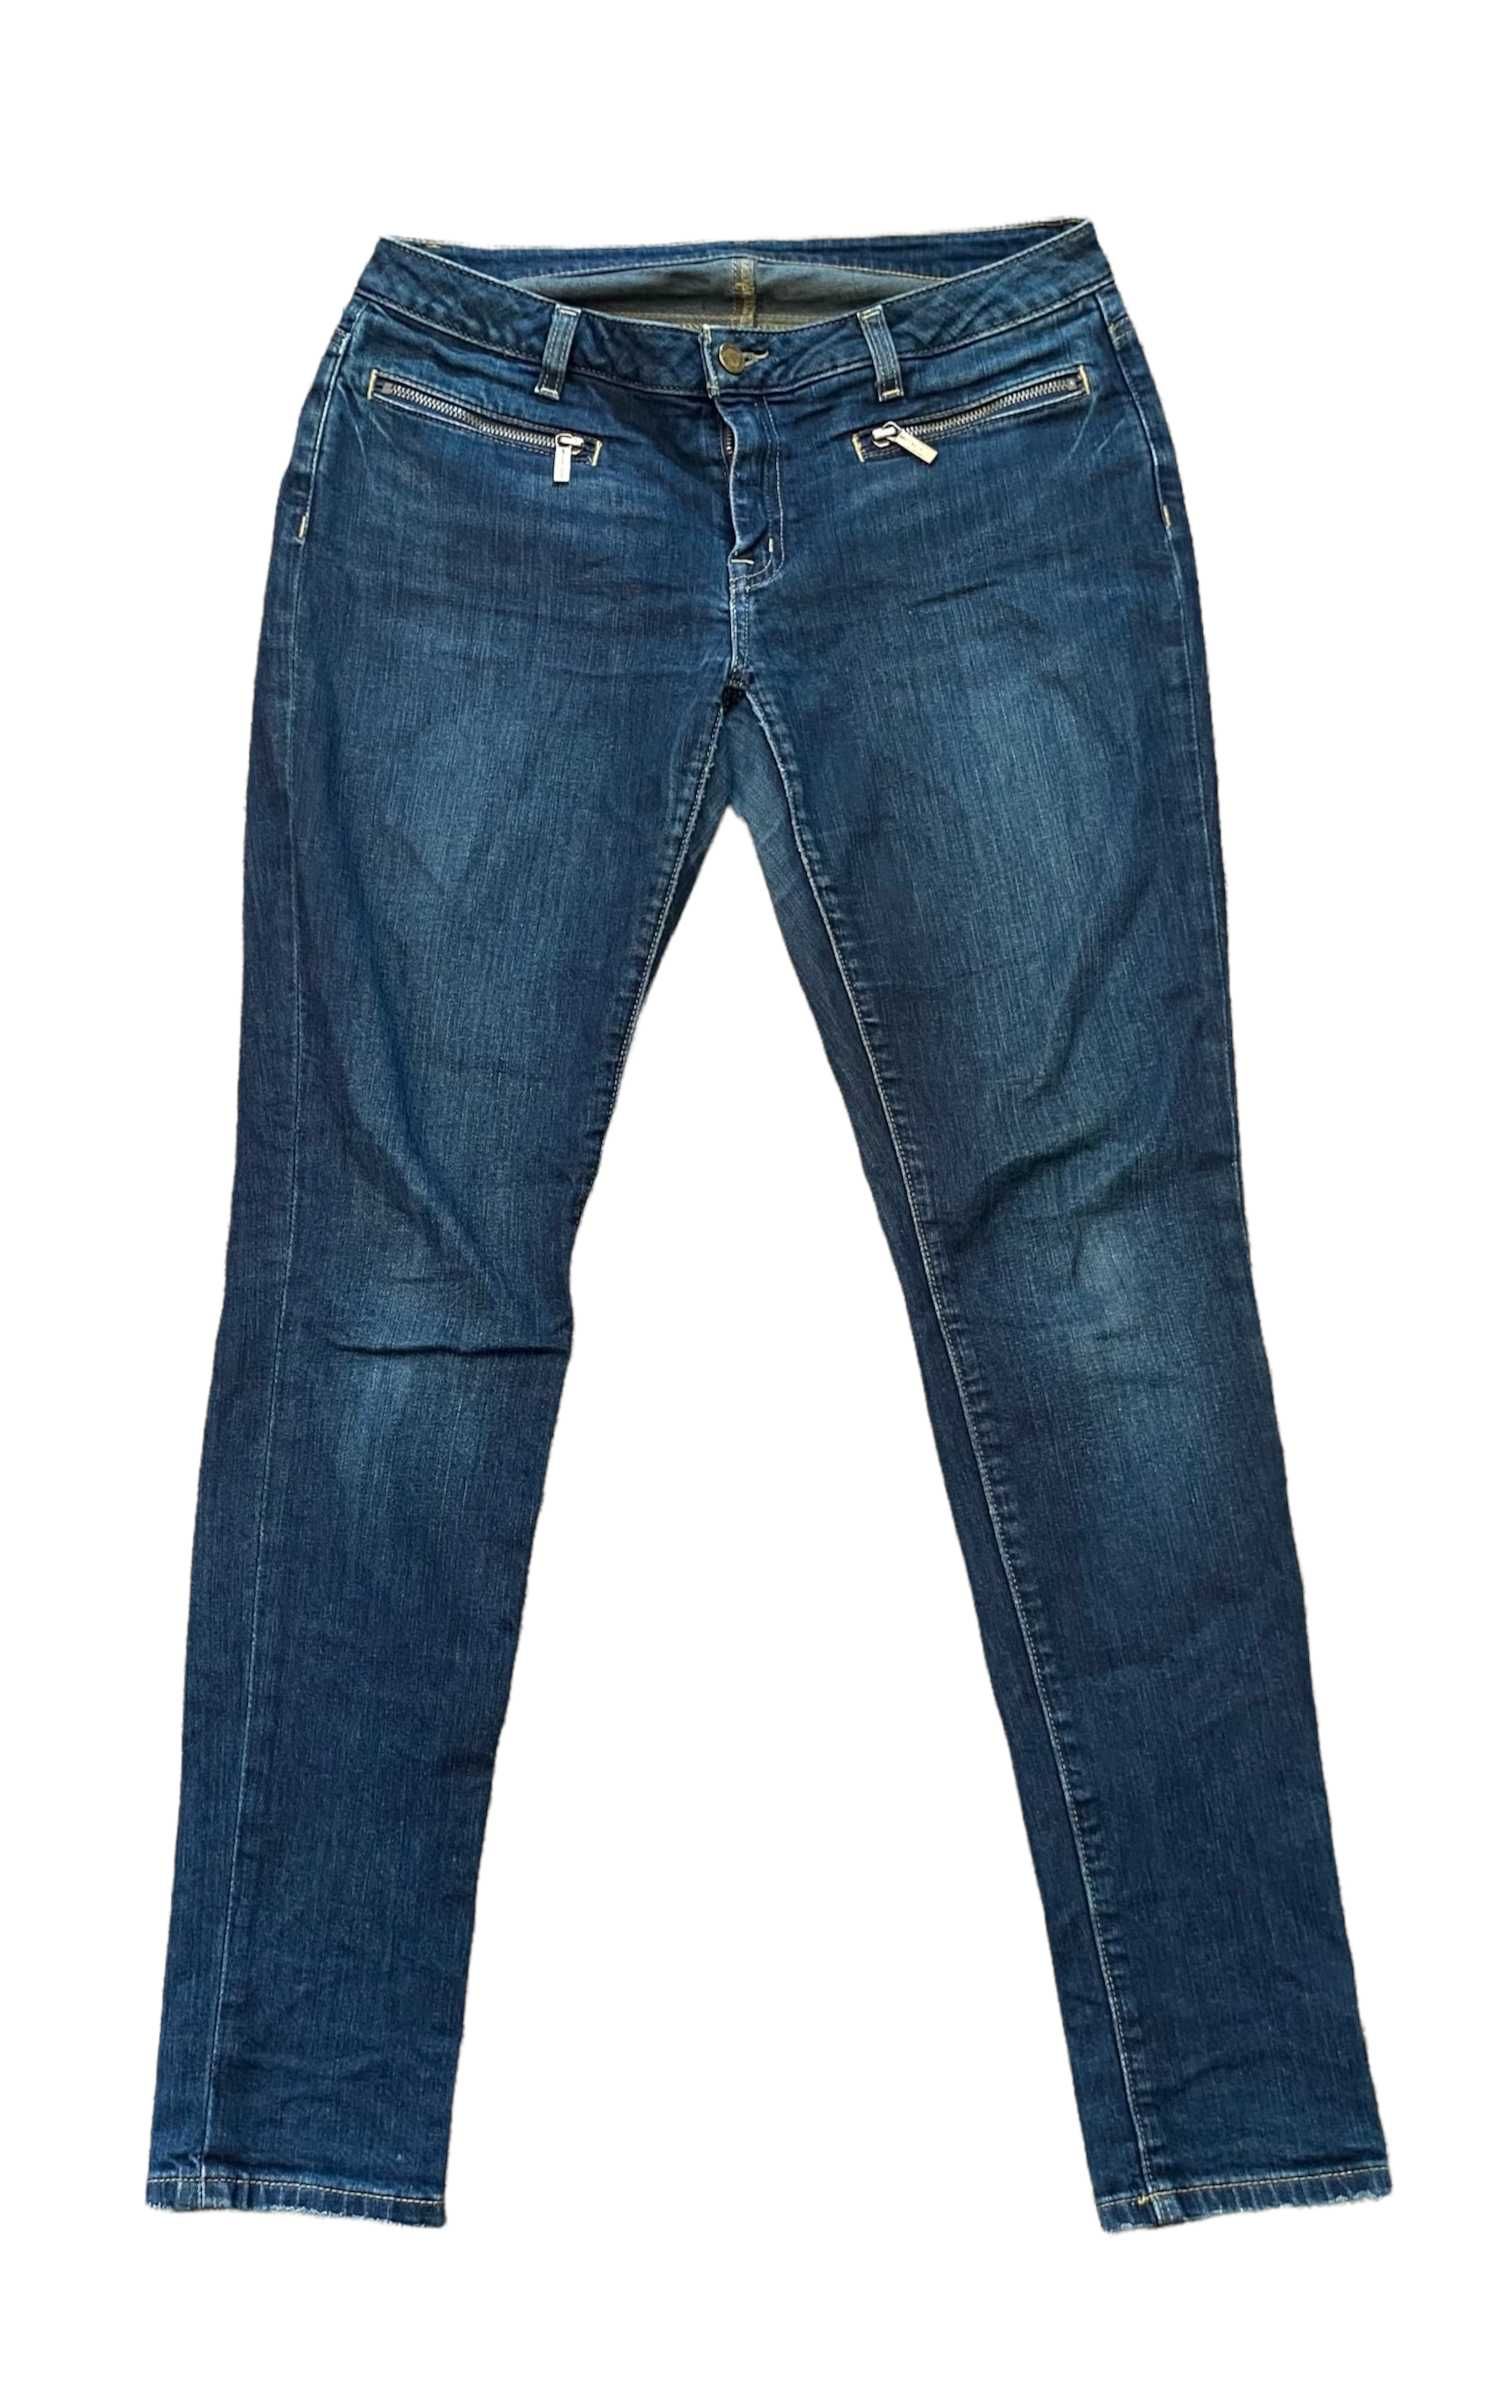 spodnie Michael Kors skinny, damskie, rozmiar 8, stan bardzo dobry